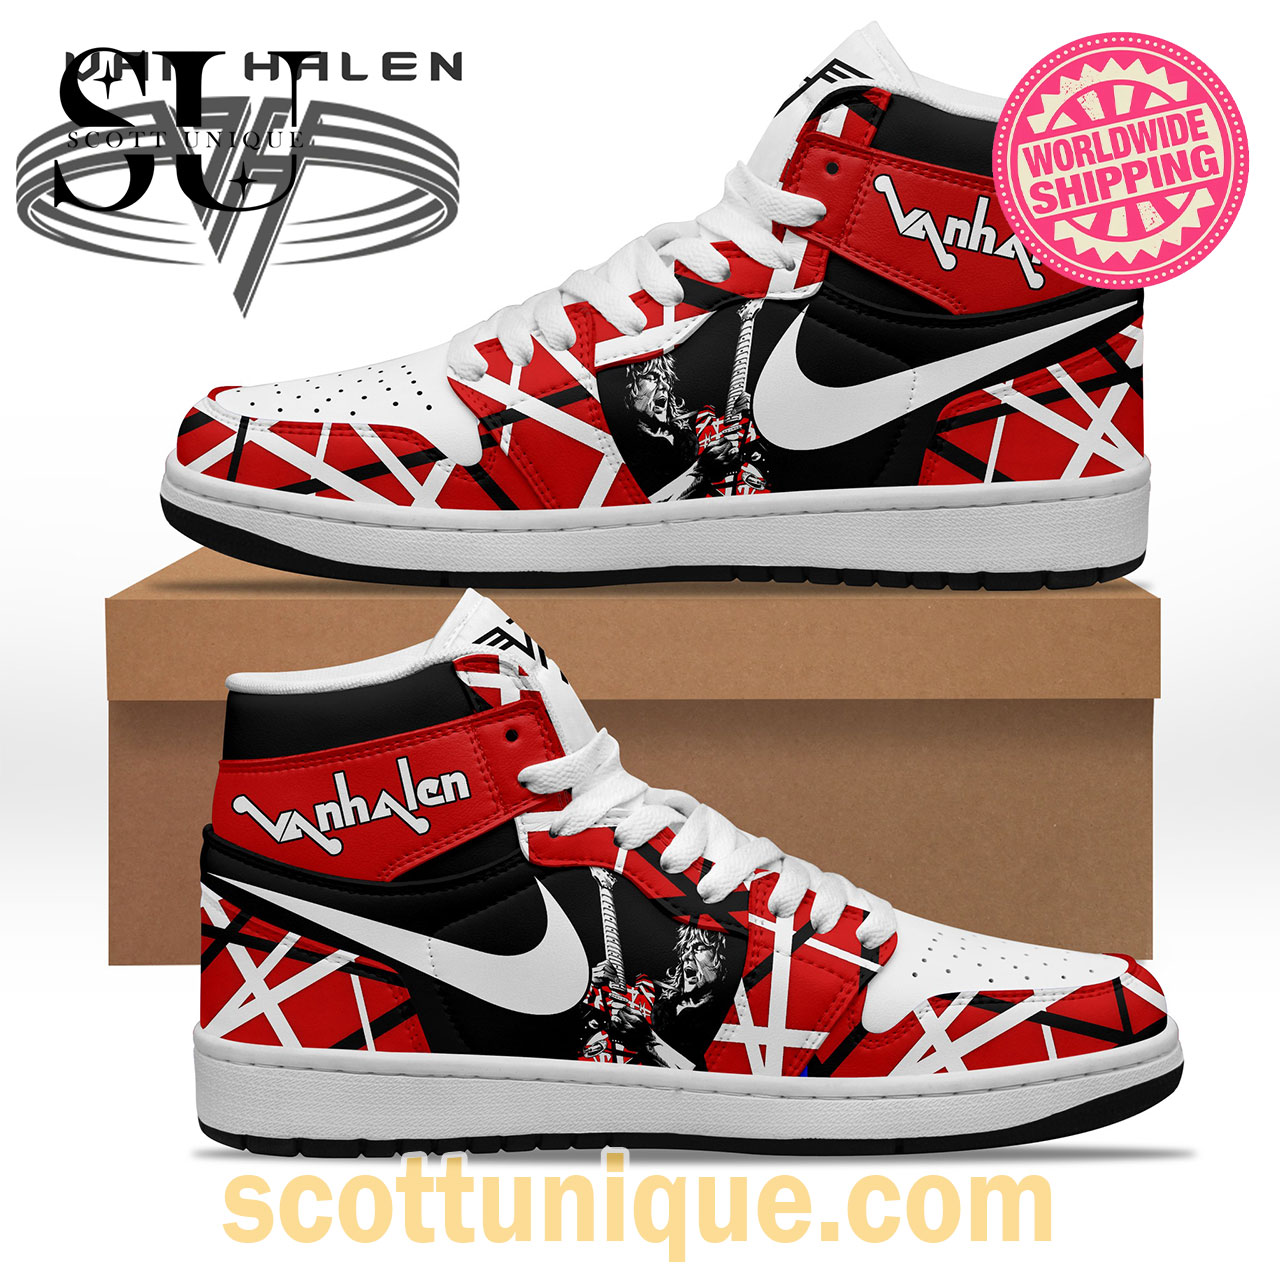 Van Halen Artwork Music Nike Air Jordan High Top Sneakers